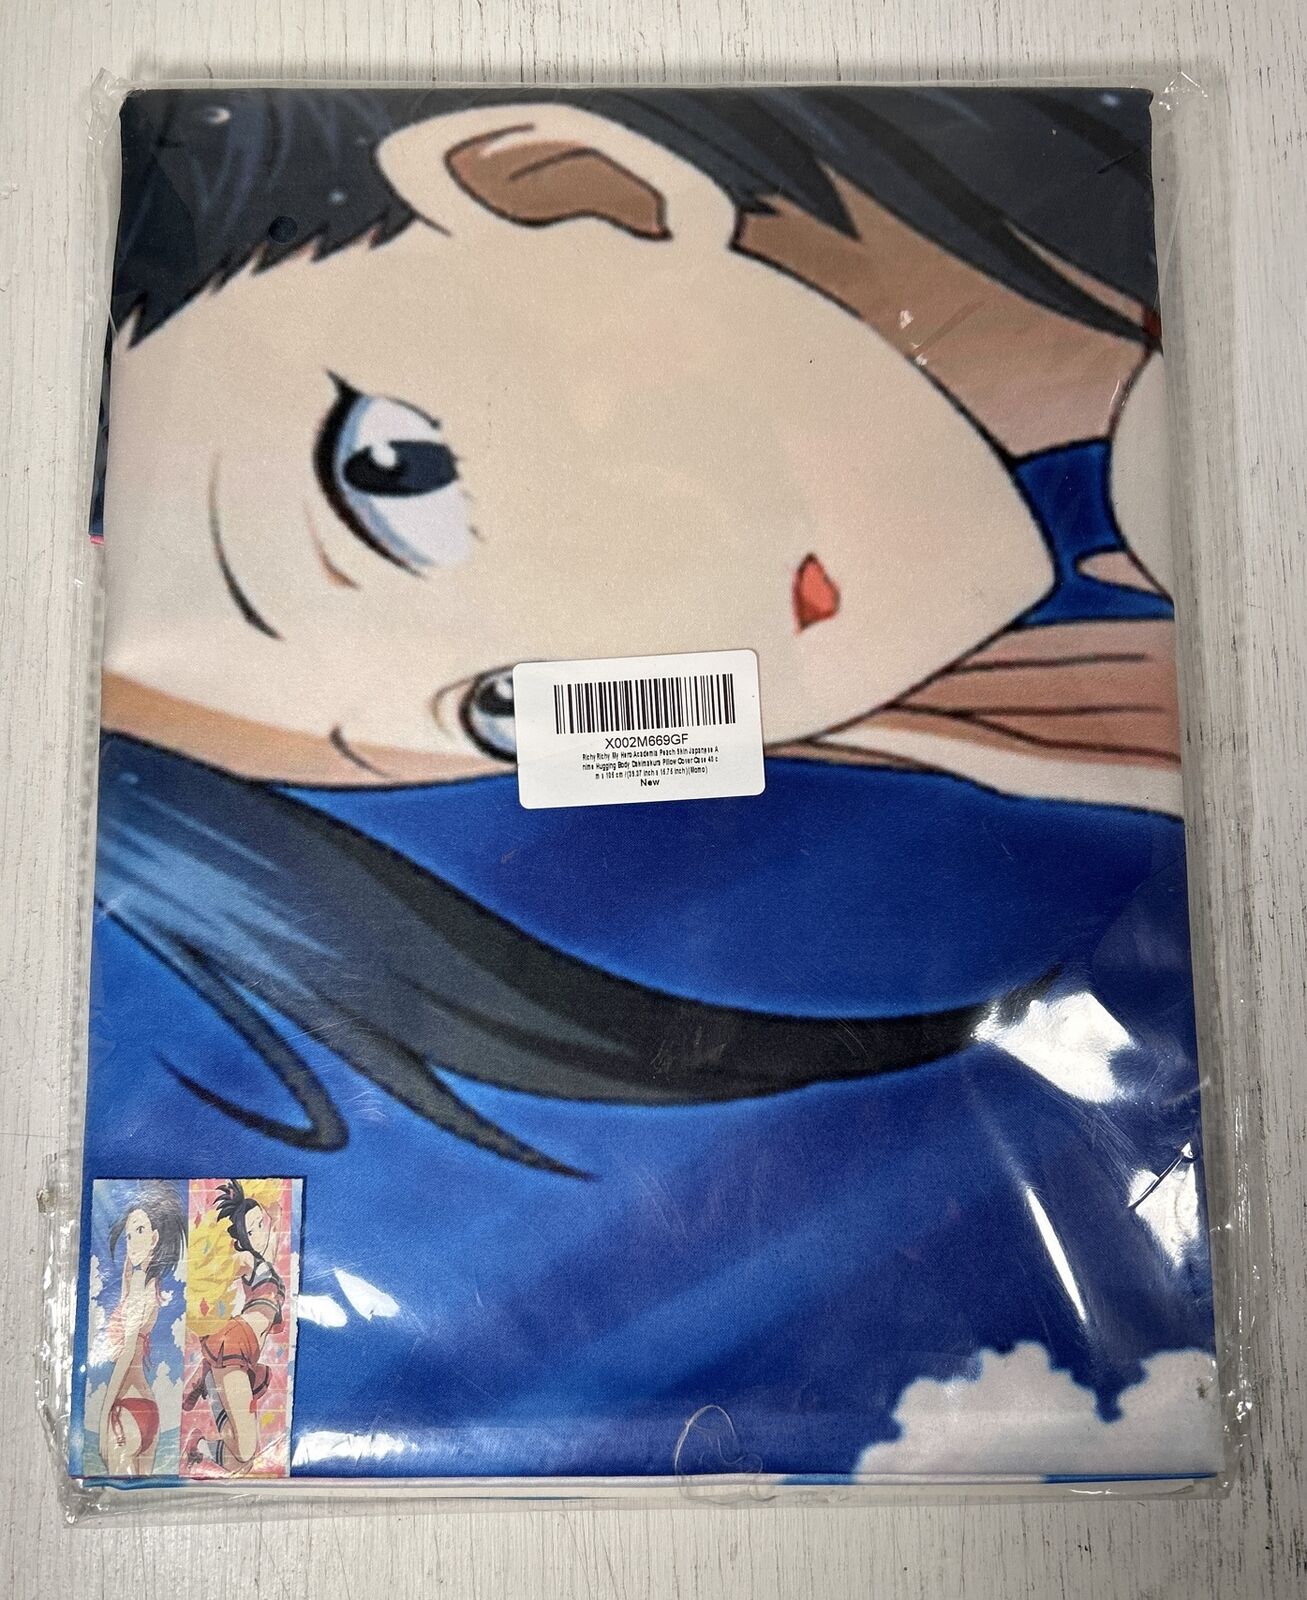 Awesome Richy Richy My Hero Academia Peach Skin Japanese Anime Body Pillow Case Cover on eBay